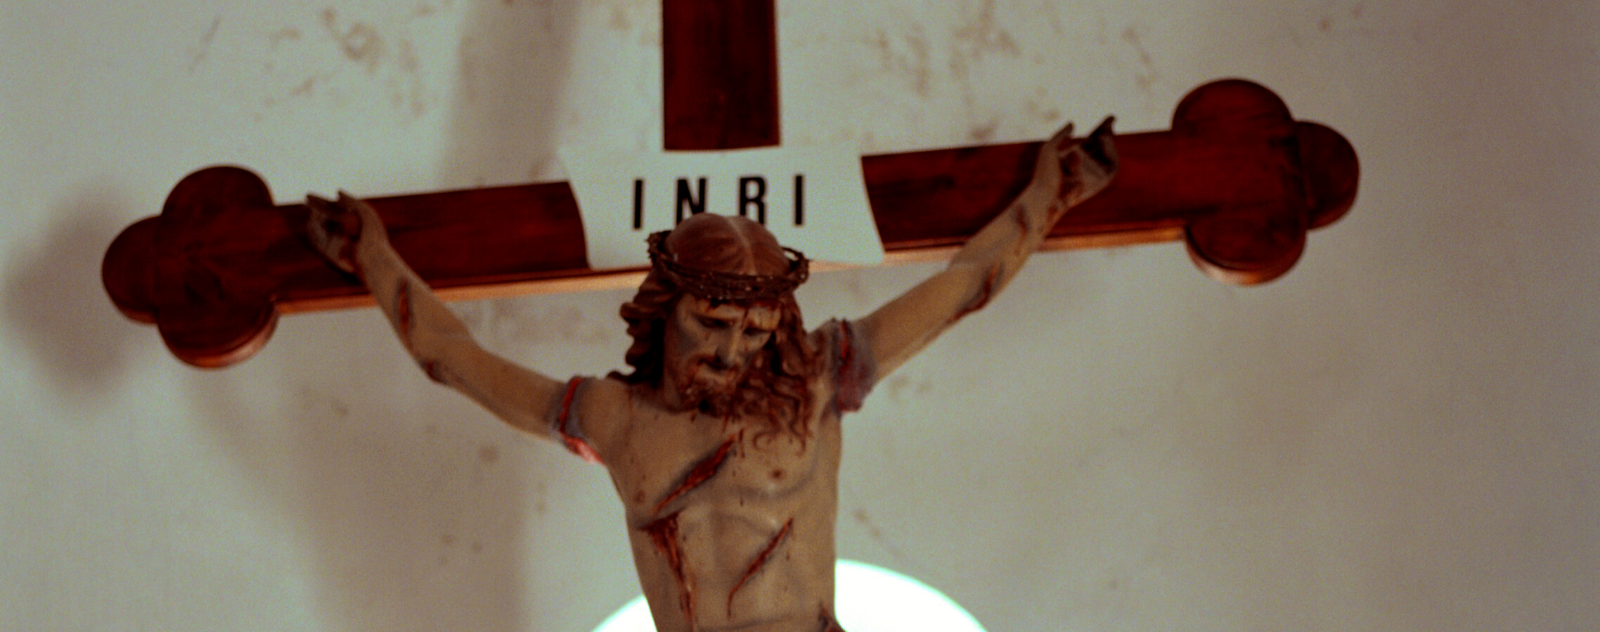 INRI Christian cross